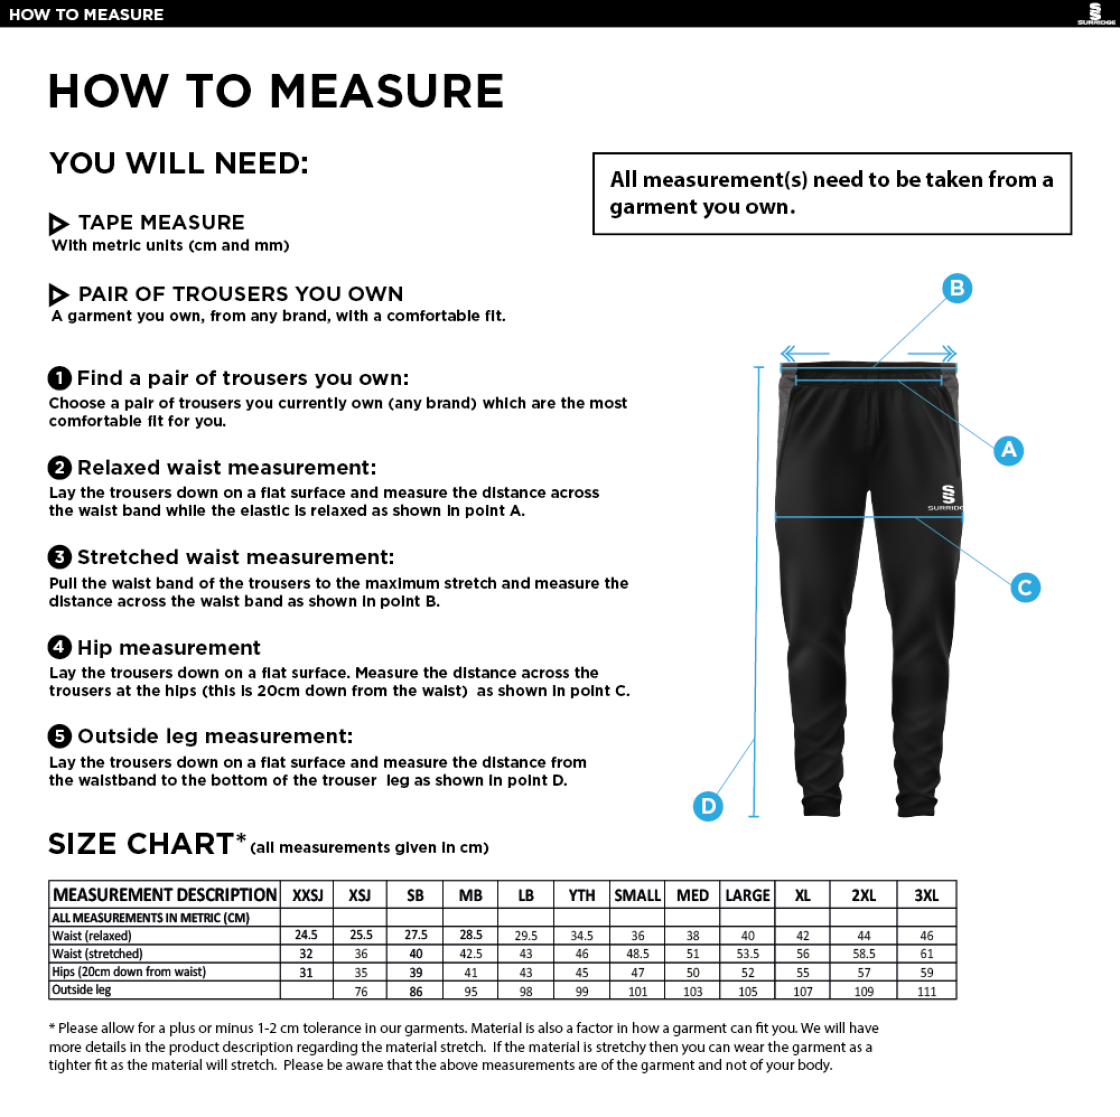 Tek Slim Training Pants : Navy - Size Guide